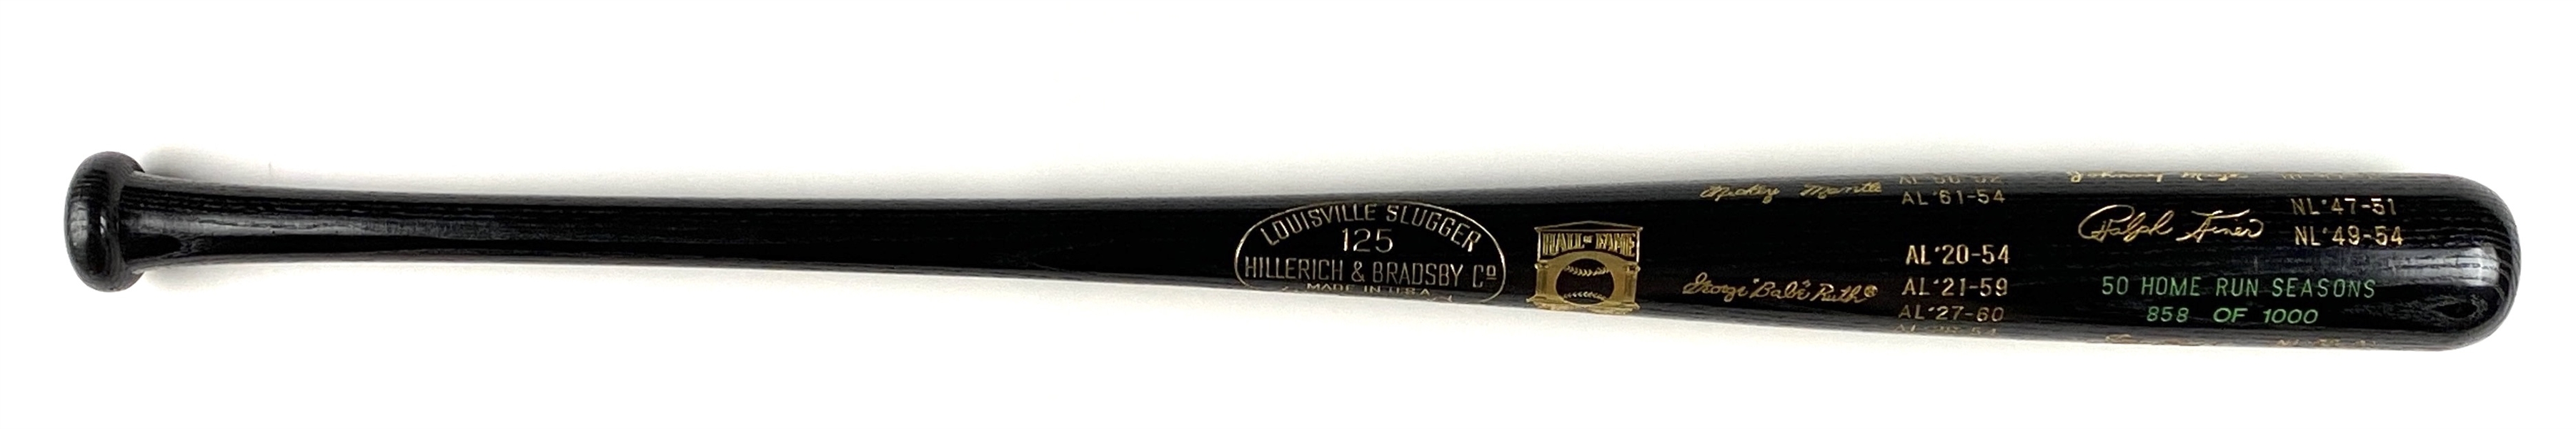 Hall of Fame “50 HR Seasons” Signed Johnny Mize Baseball Bat (Beckett/BAS Guaranteed) 